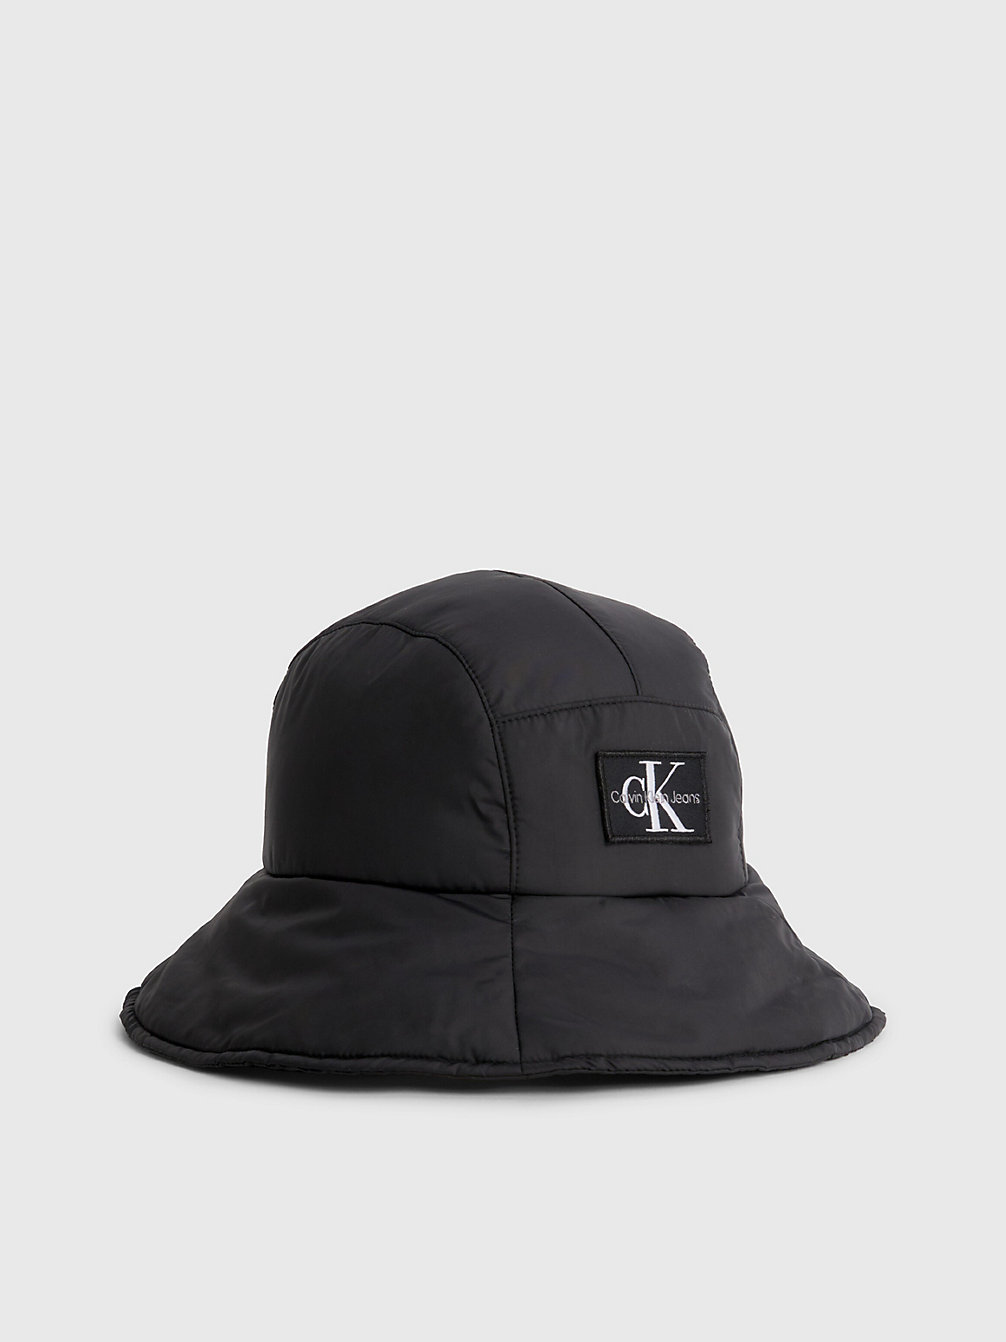 CK BLACK > Dziecięcy Pikowany Kapelusz Typu Bucket Hat > undefined kids unisex - Calvin Klein